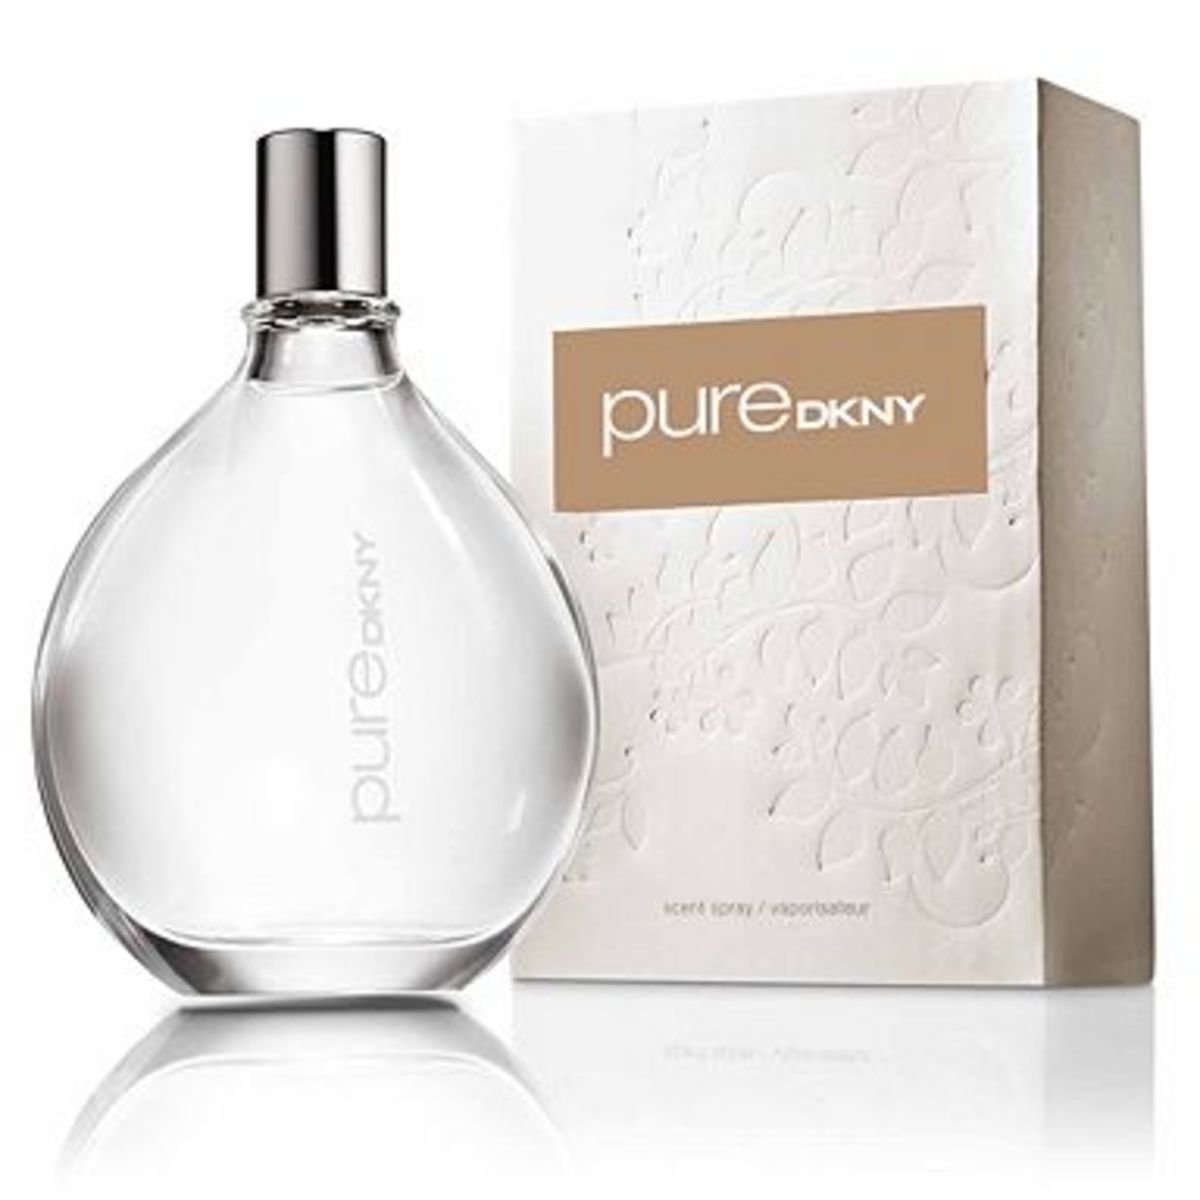 pure dkny perfume 100ml